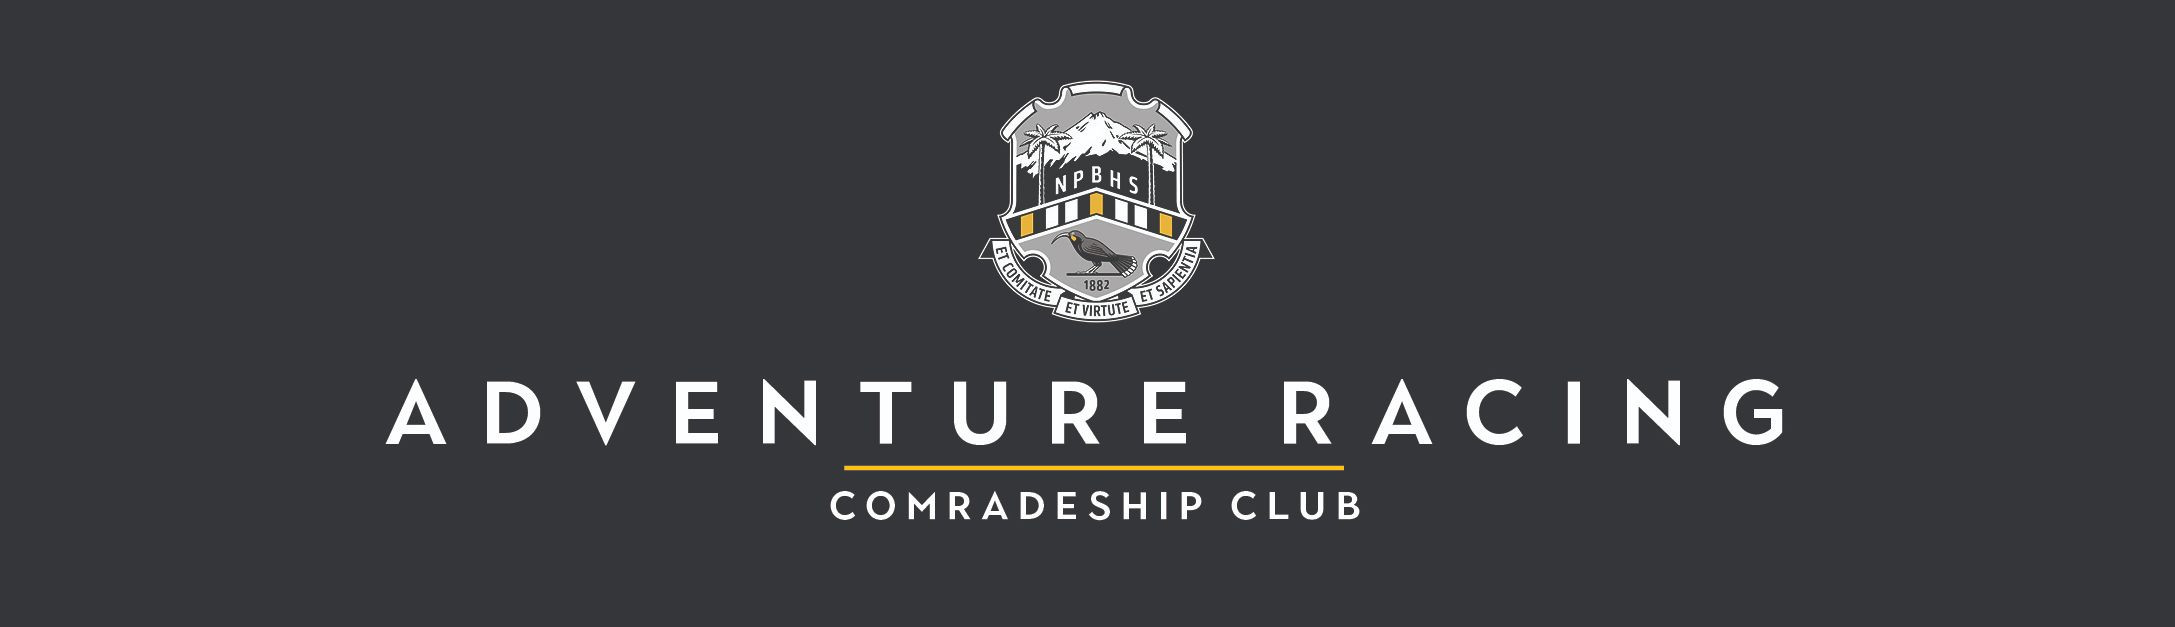 Adventure Racing Comradeship Club